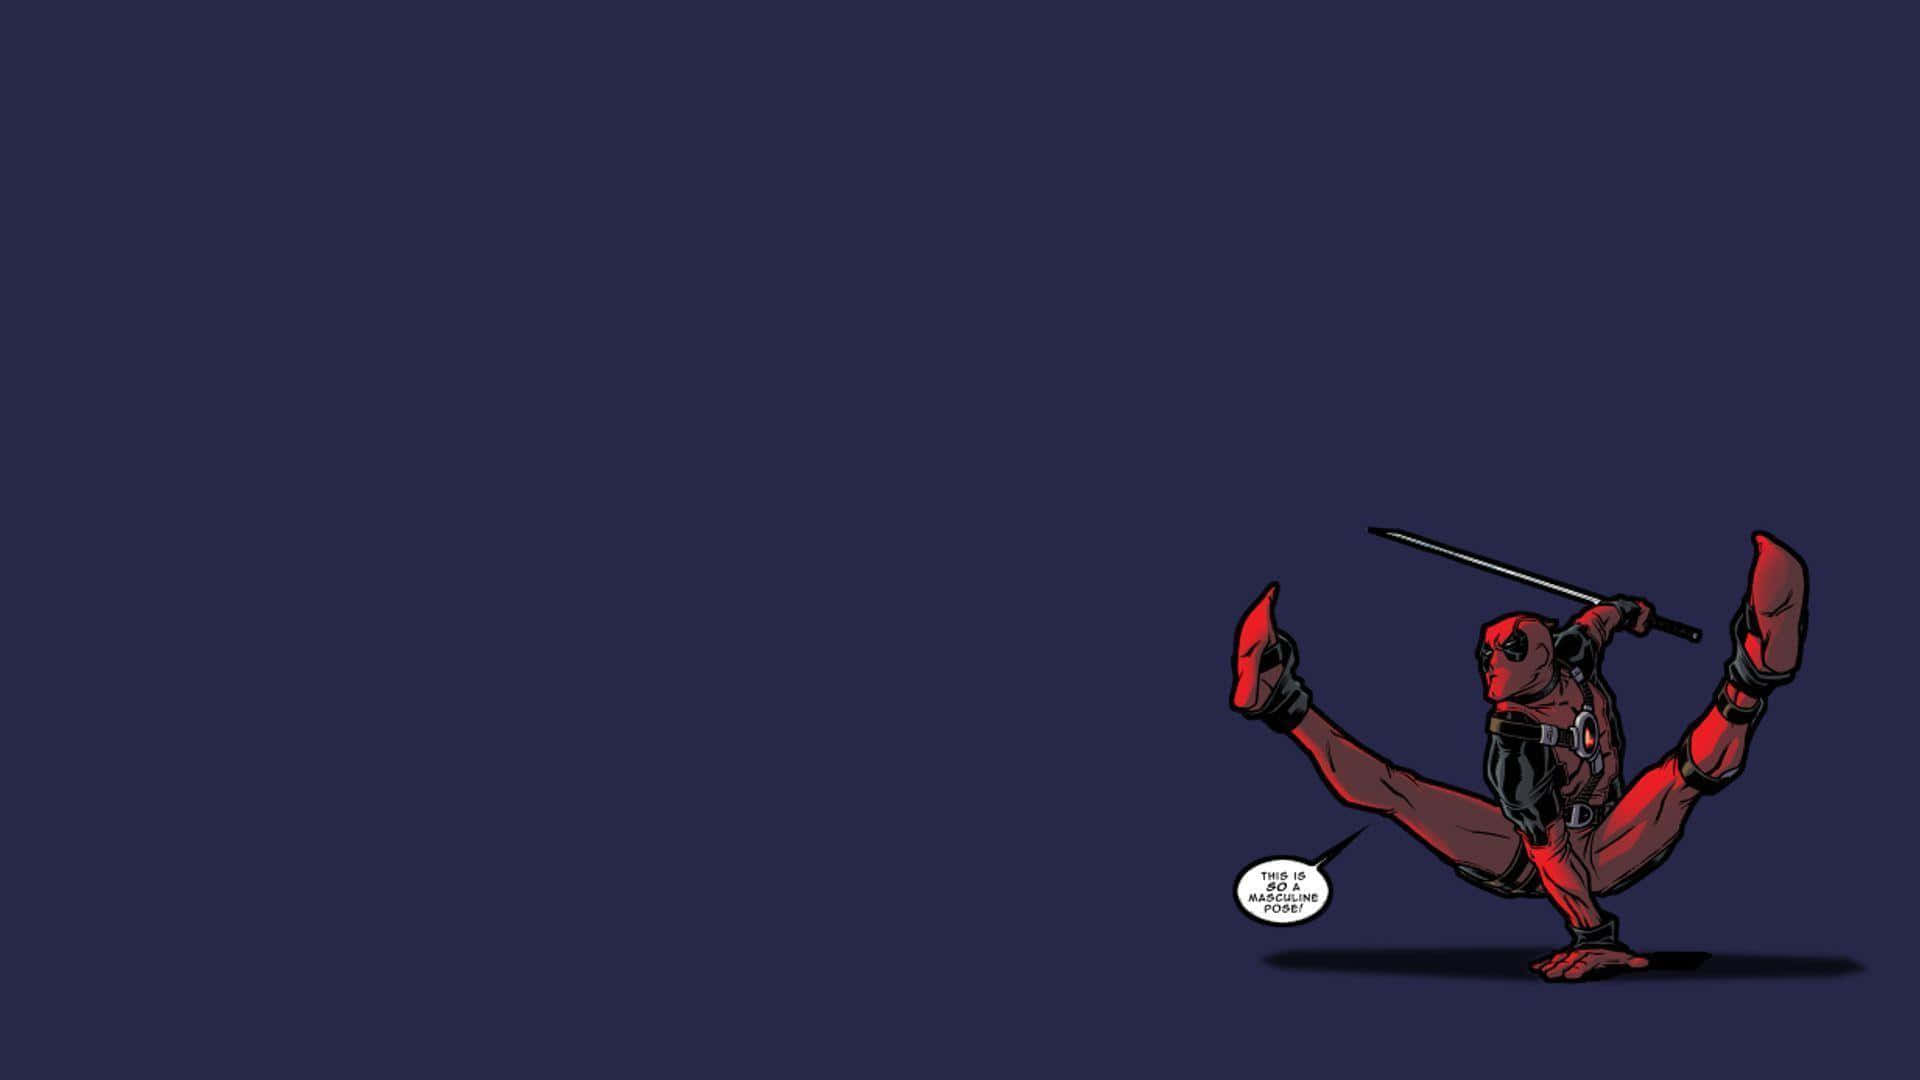 Minimalistisktcomic Deadpool-bakgrund I Enhands-handstående.